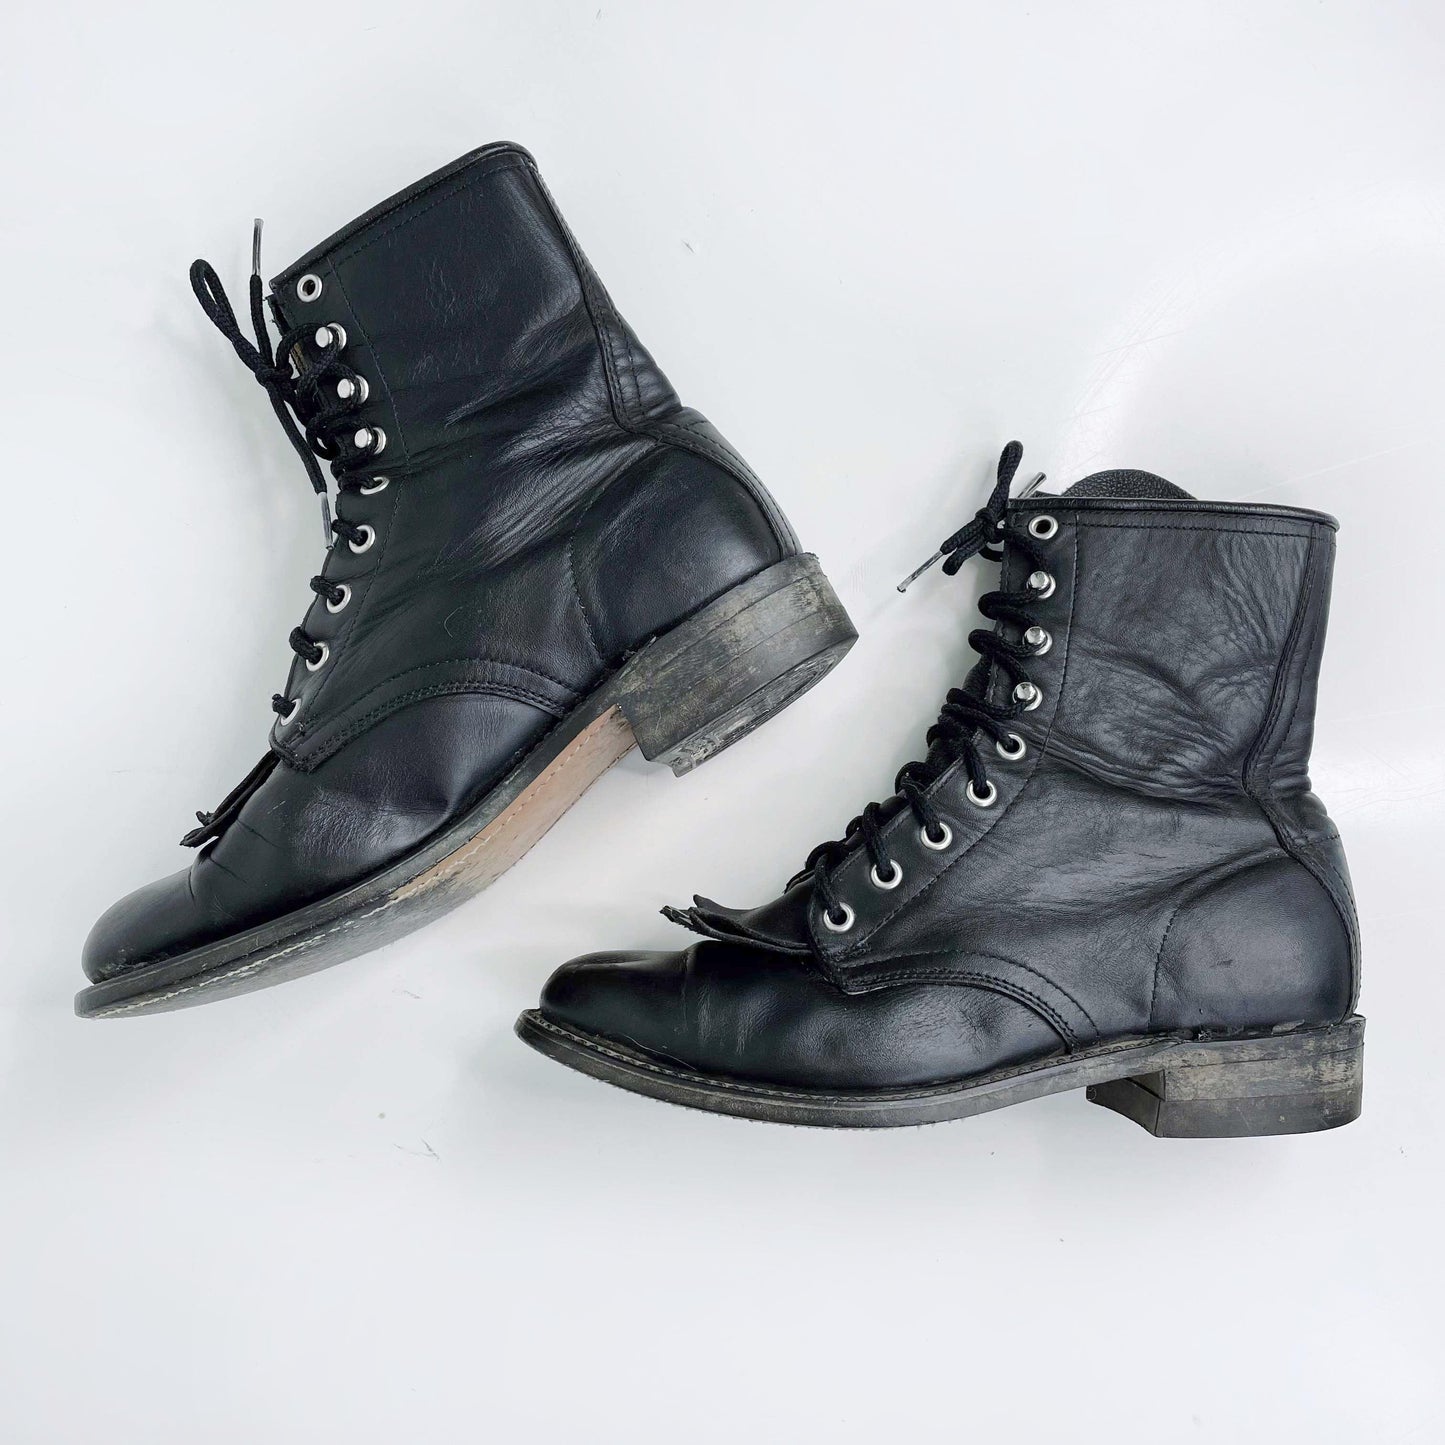 vintage black leather rodeo kiltie roper boot - size 7.5